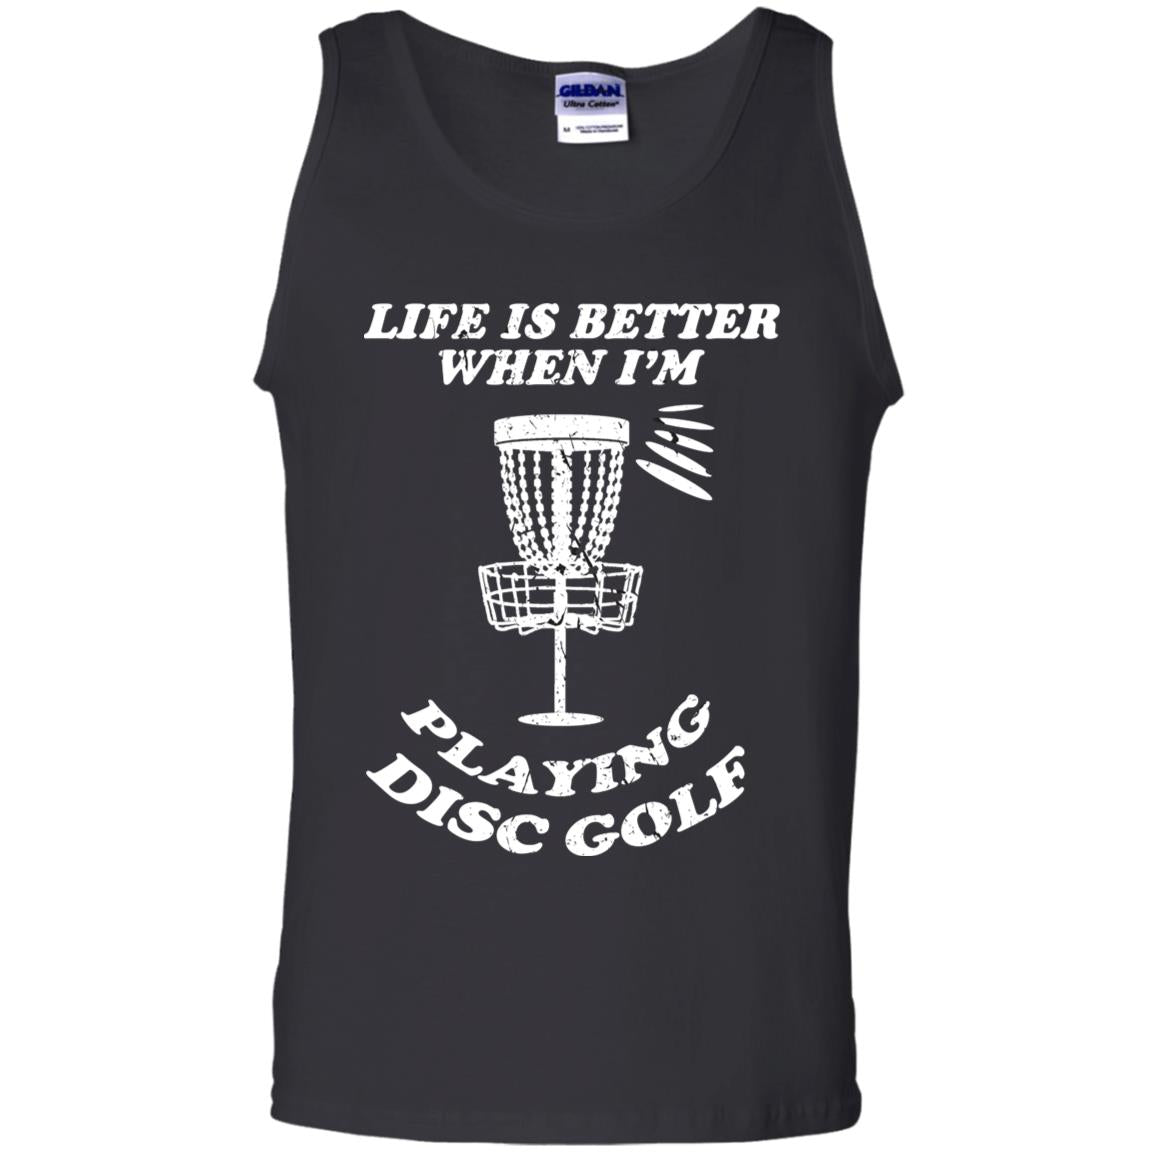 Life Is Better When I'm Playing Dics Golf Shirt For Mens Or WomensG220 Gildan 100% Cotton Tank Top